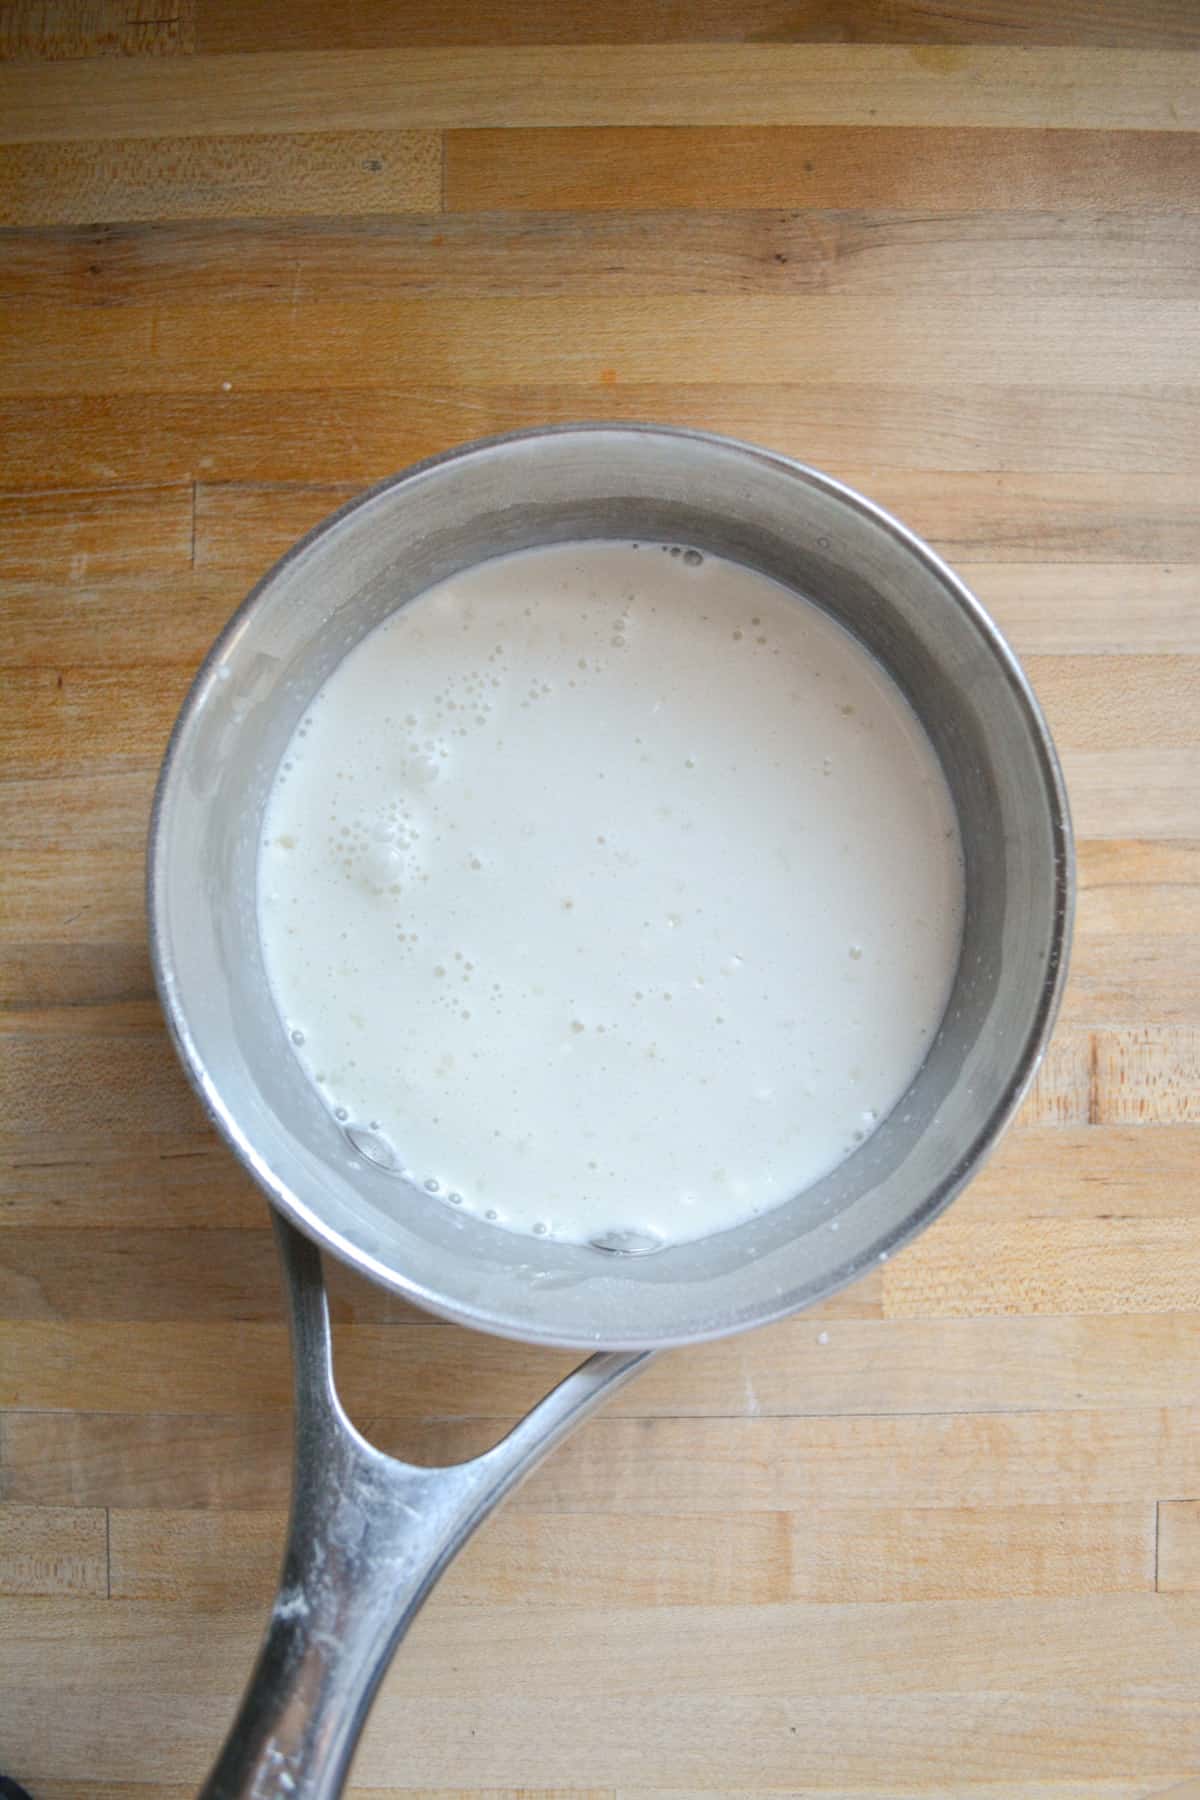 Sugar and cornstarch mixture added into the non-dairy milk mixture.